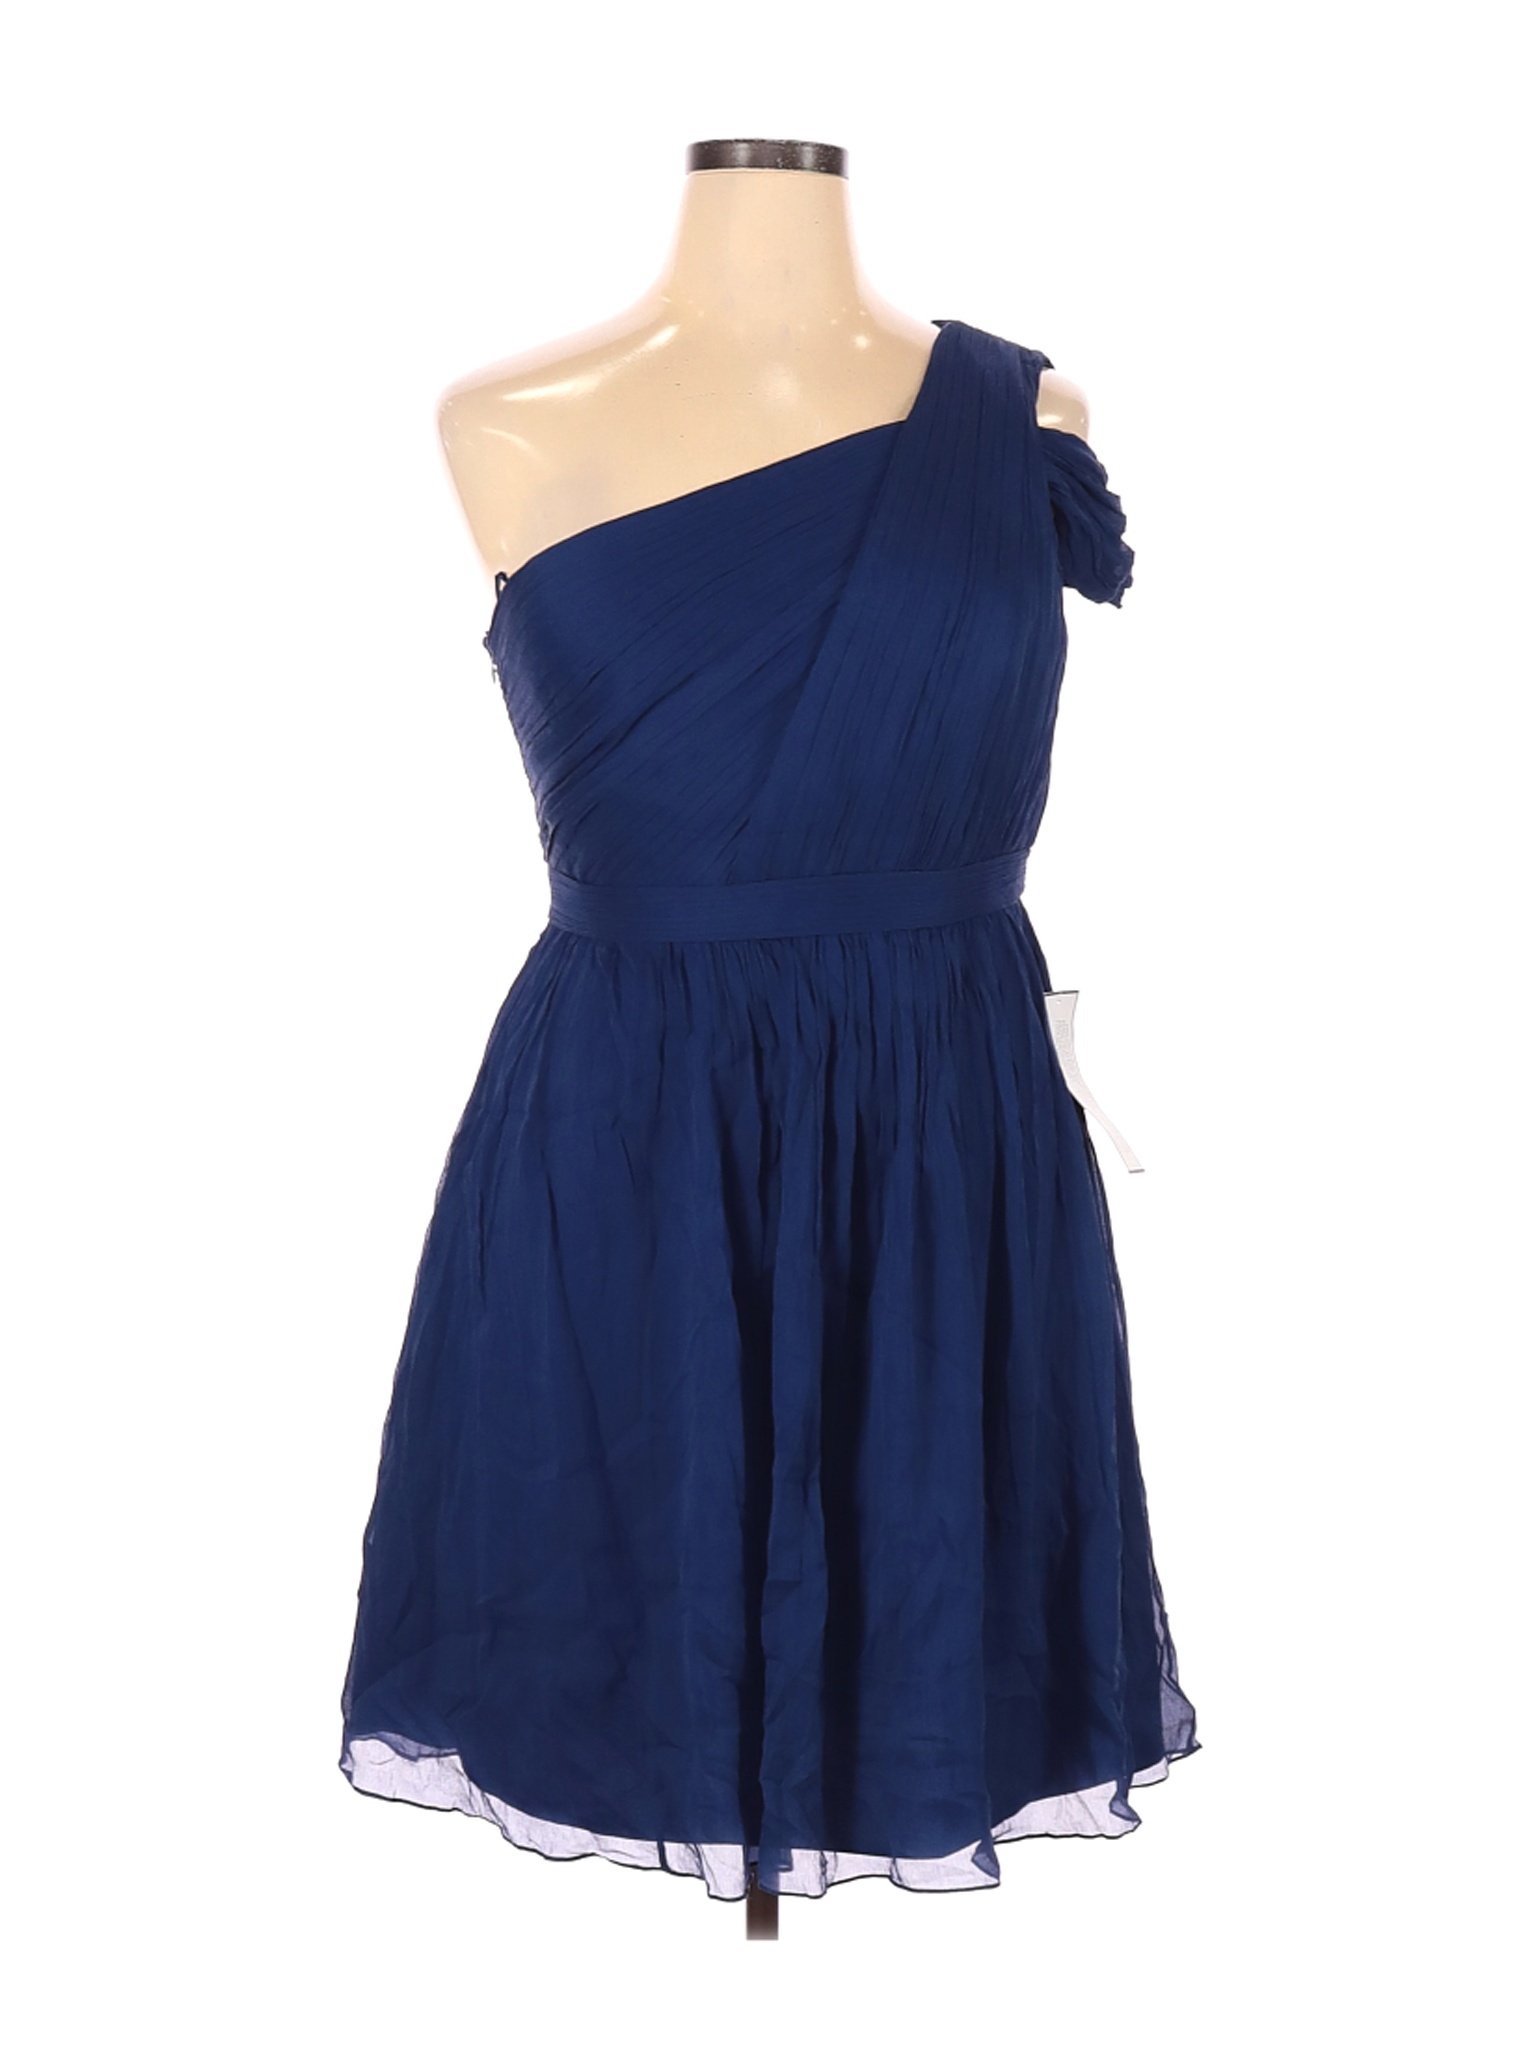 NWT J.Crew Women Blue Cocktail Dress 14 | eBay